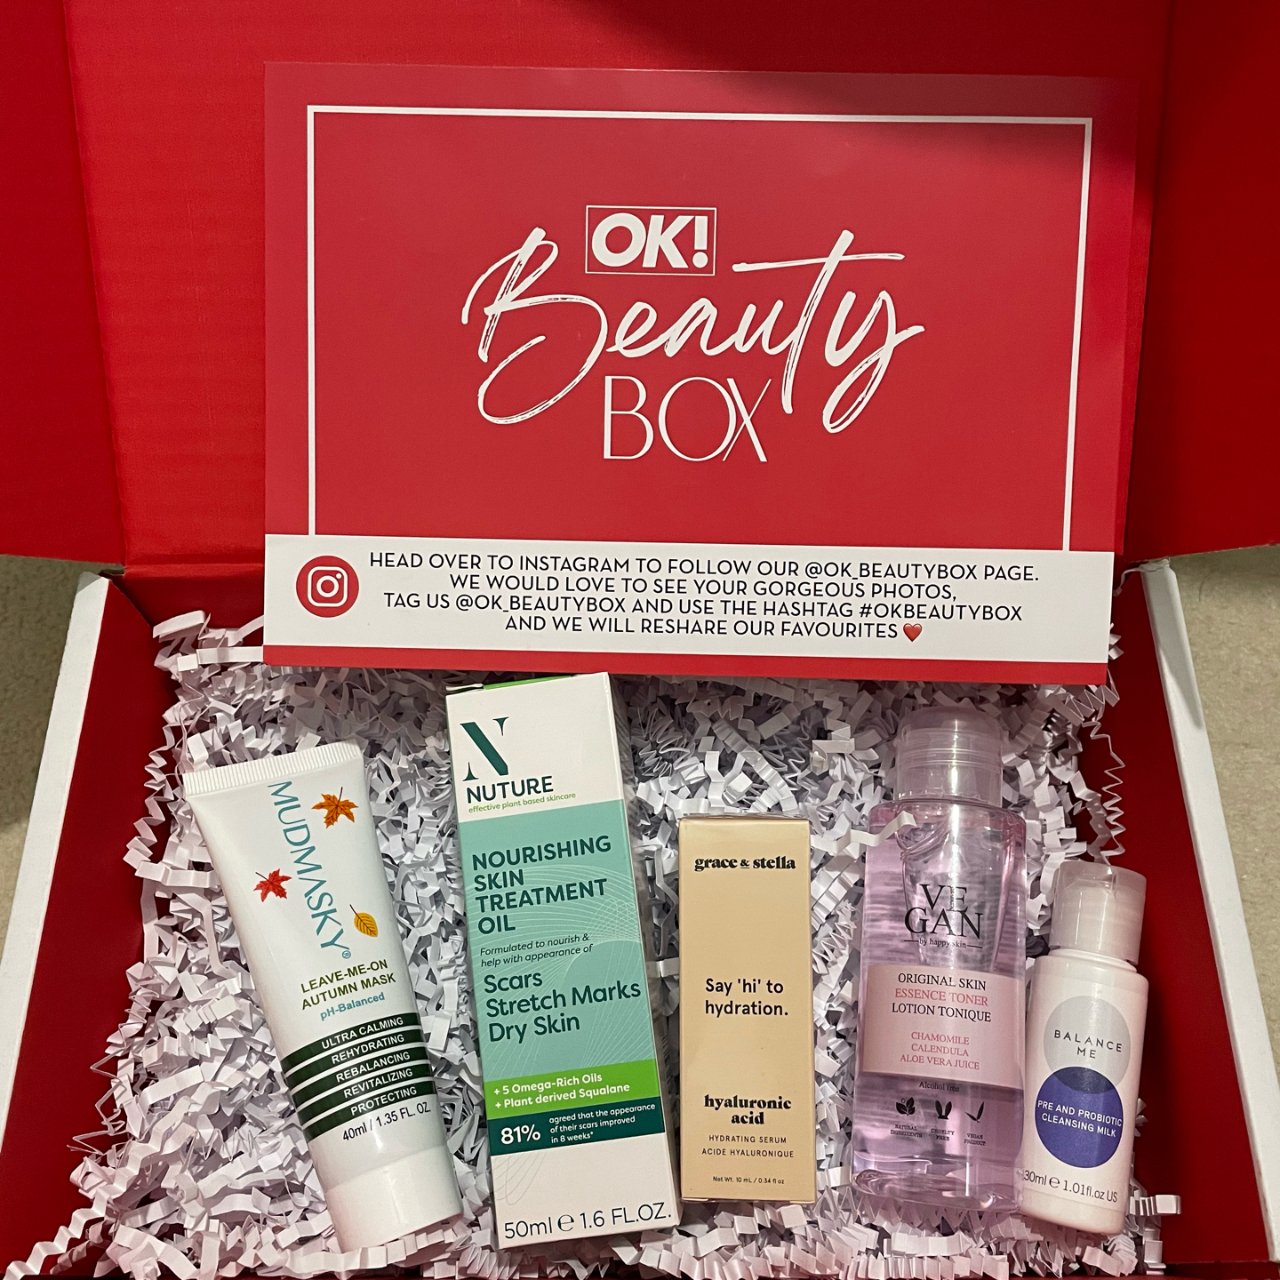 The OK! Monthly Beauty Box Subscription – OK! Beauty Box